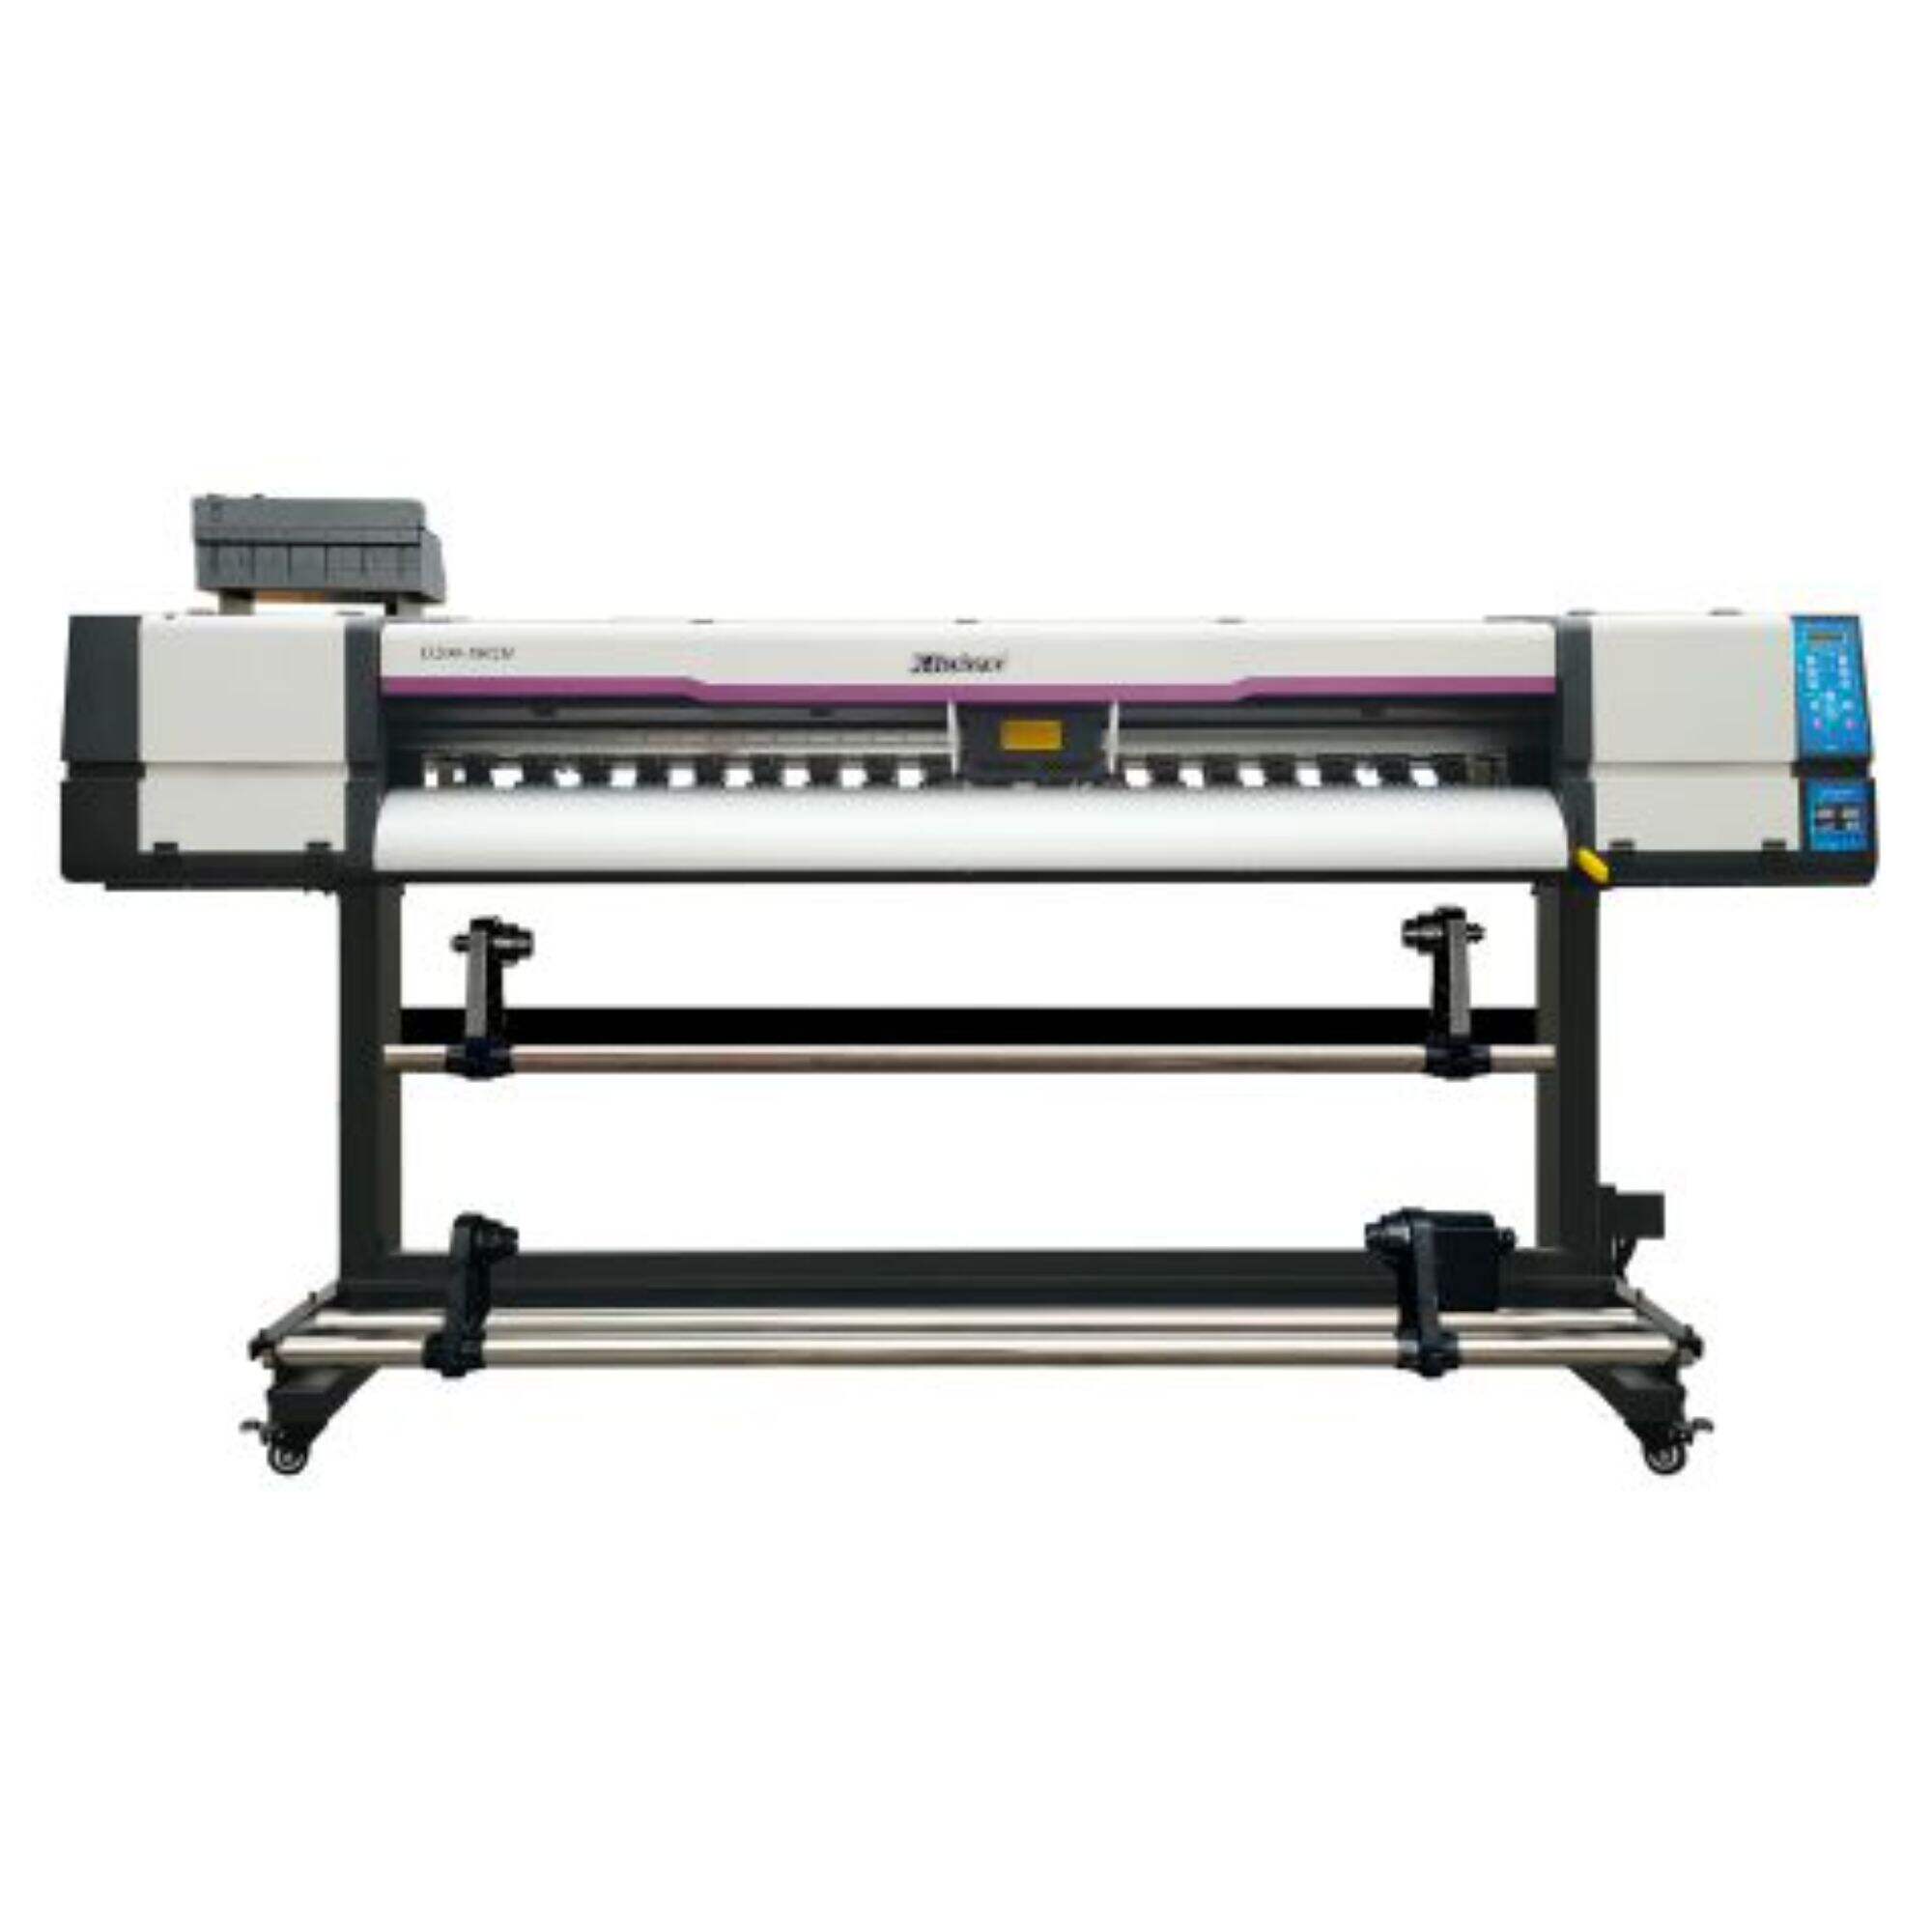 XL-1802H  I3200 UV printer